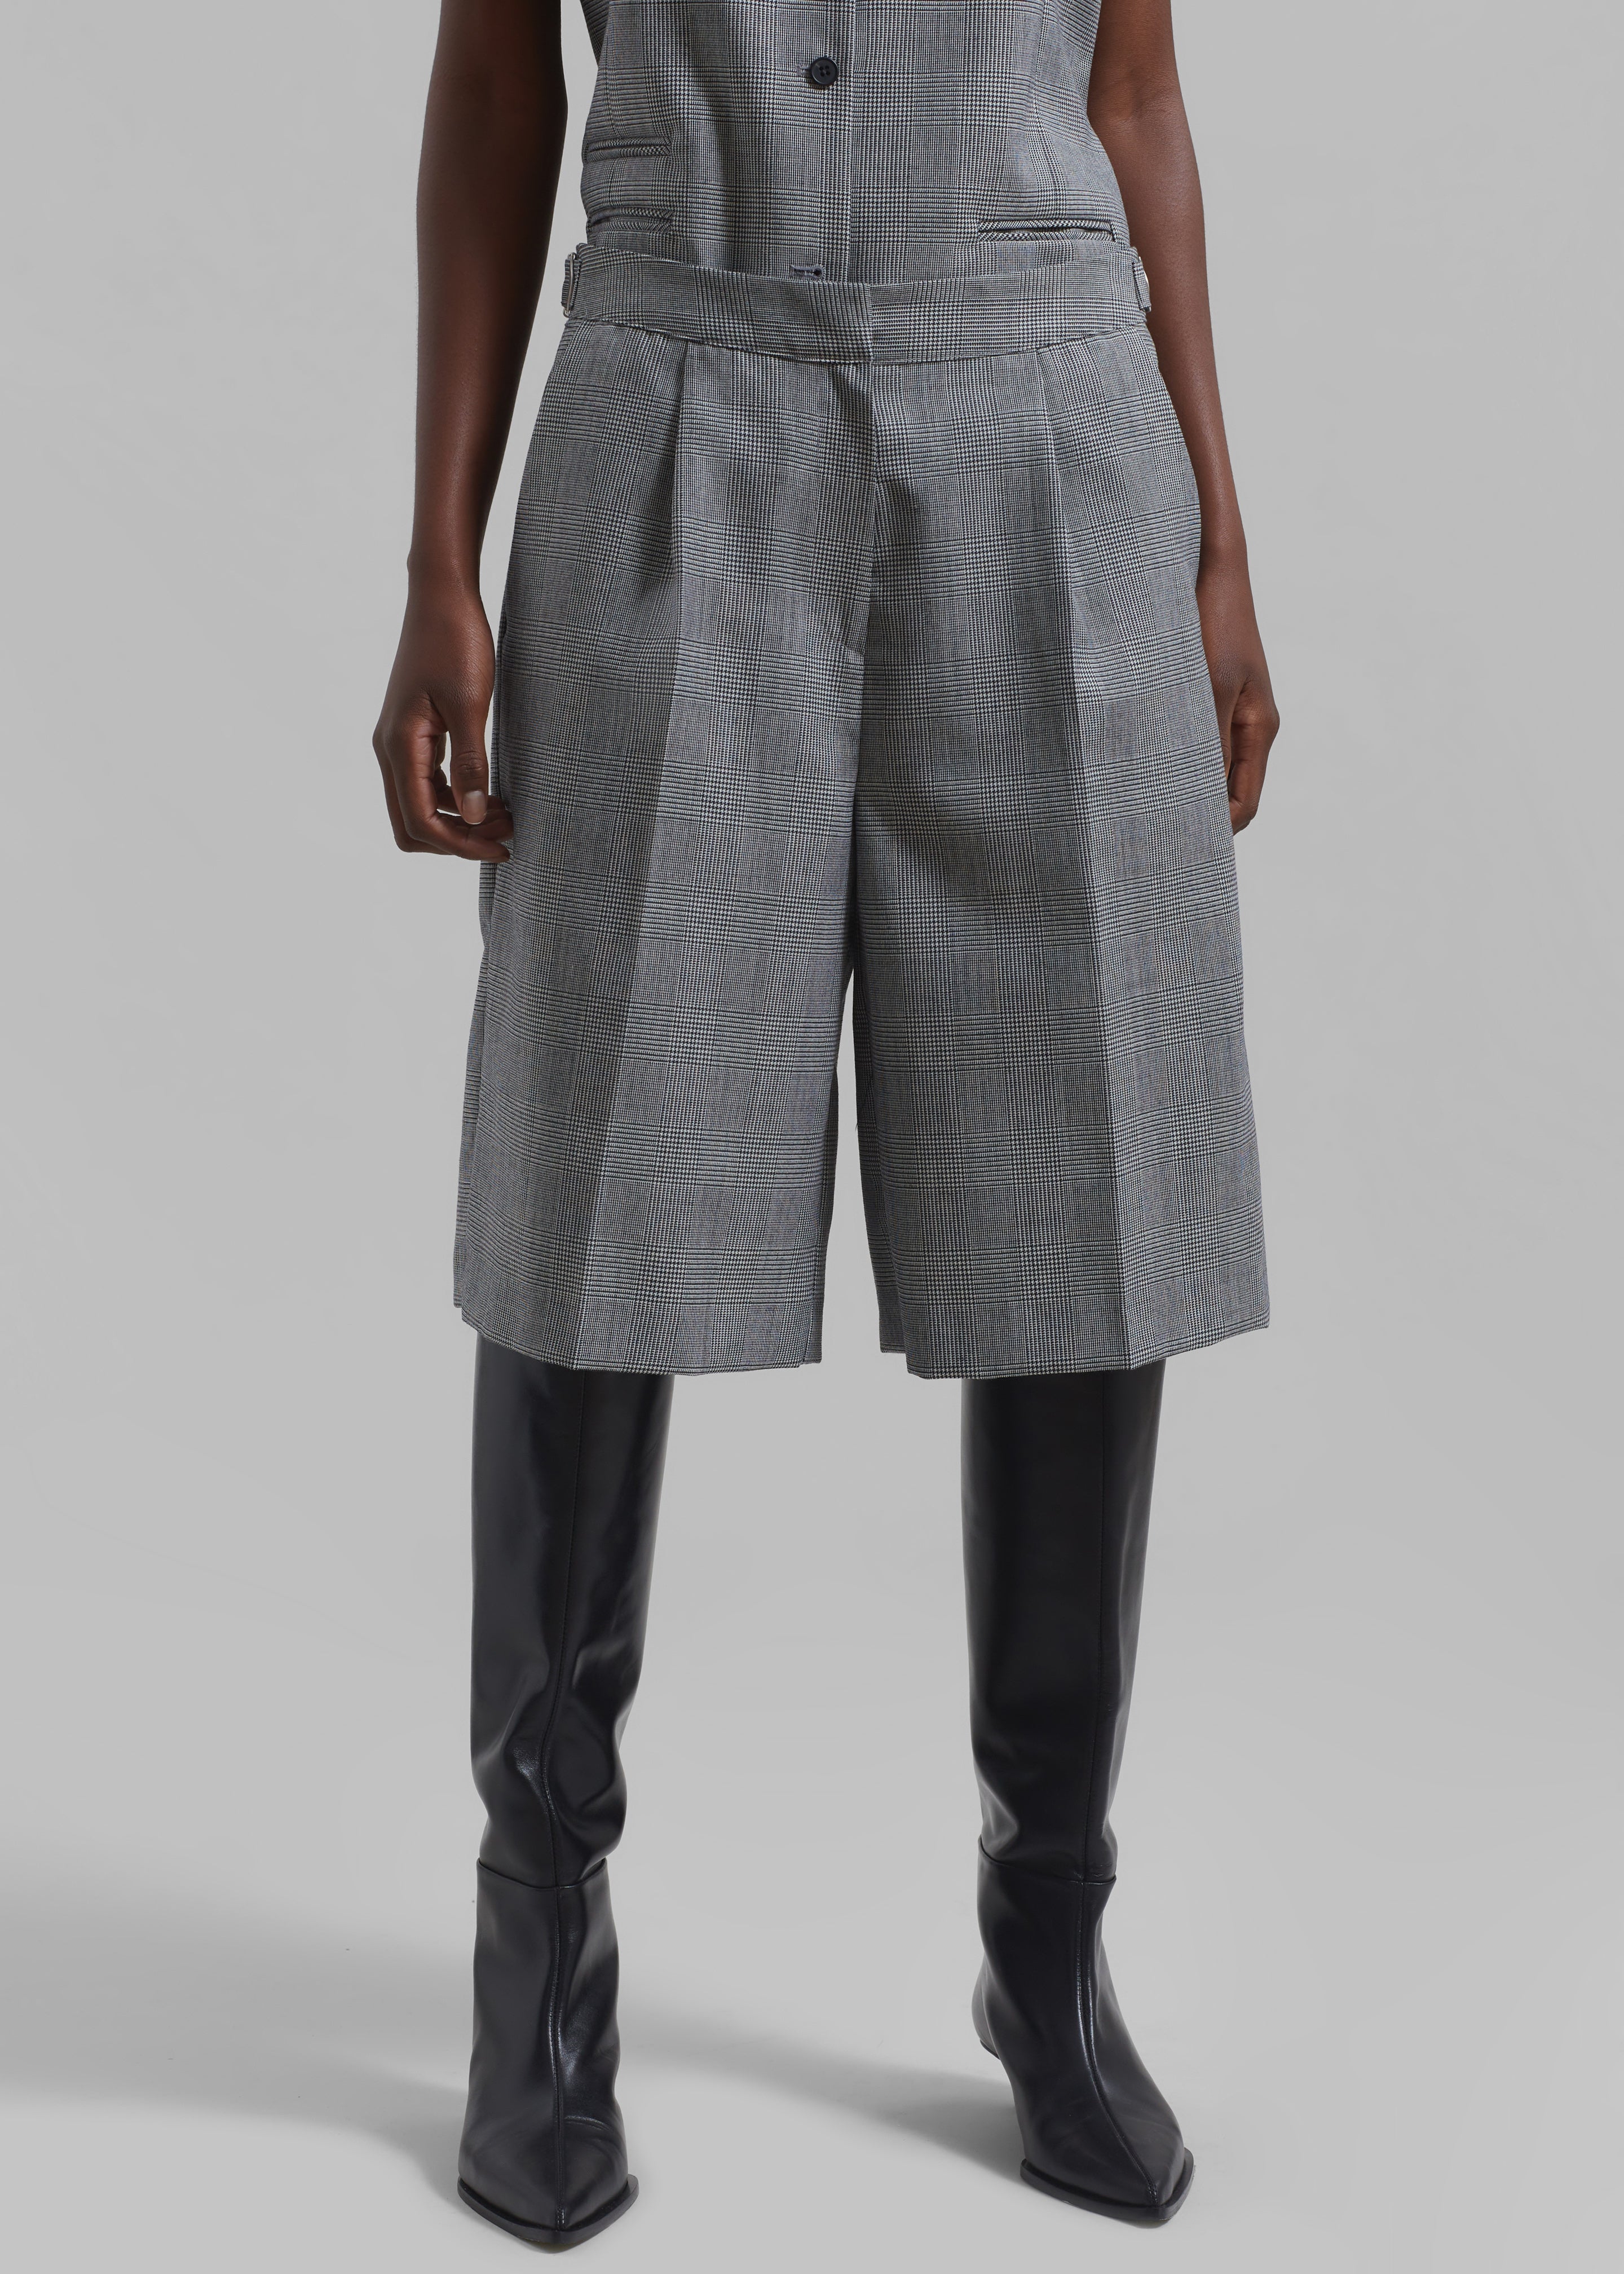 Essie Wool Bermuda Shorts - Light Grey Plaid - 6